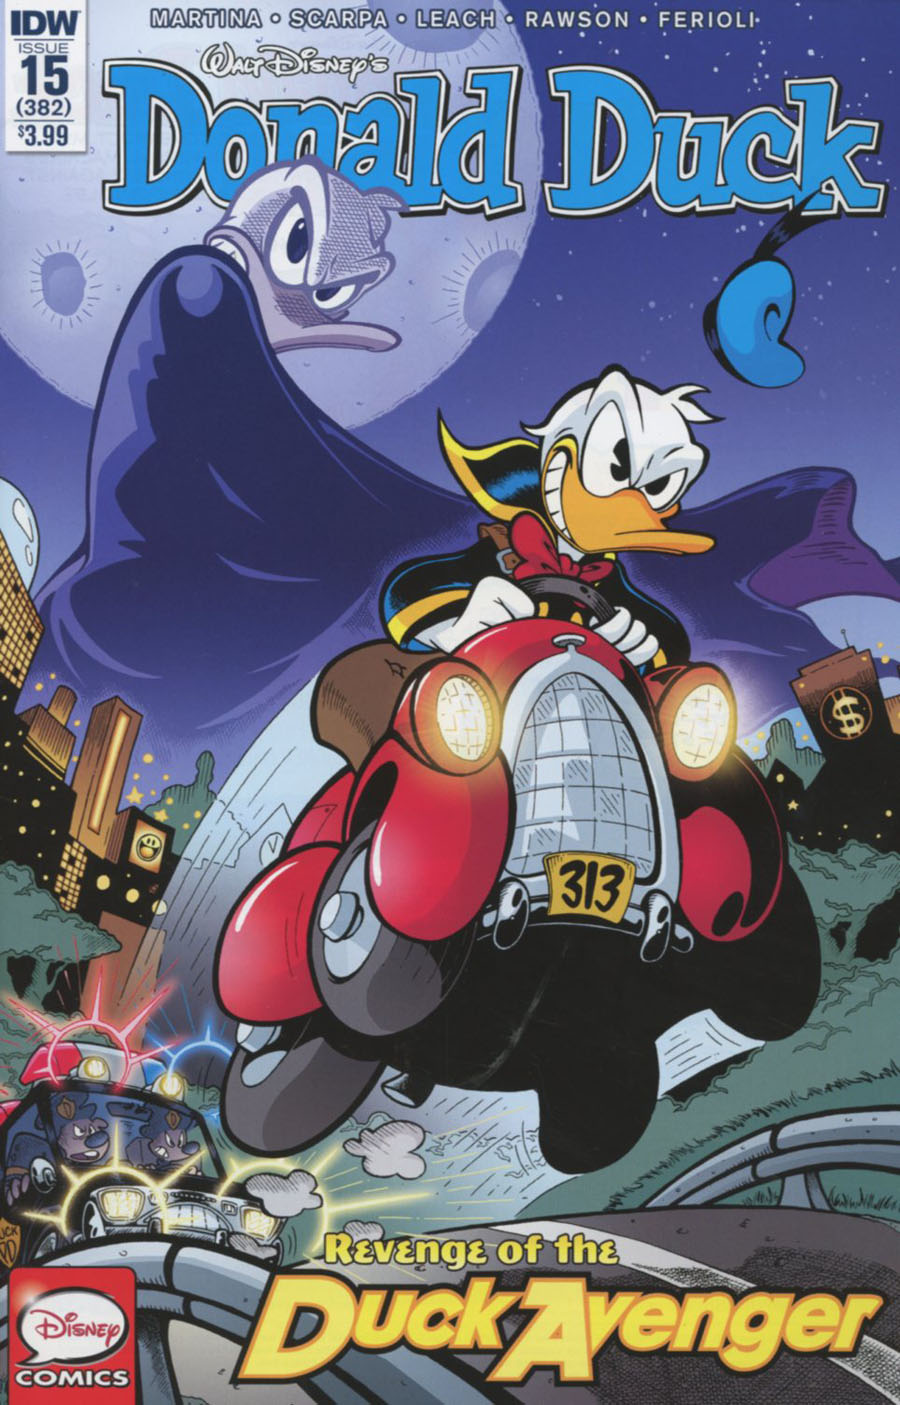 Donald Duck Vol 2 #15 Cover A Regular Jonathan Gray Cover